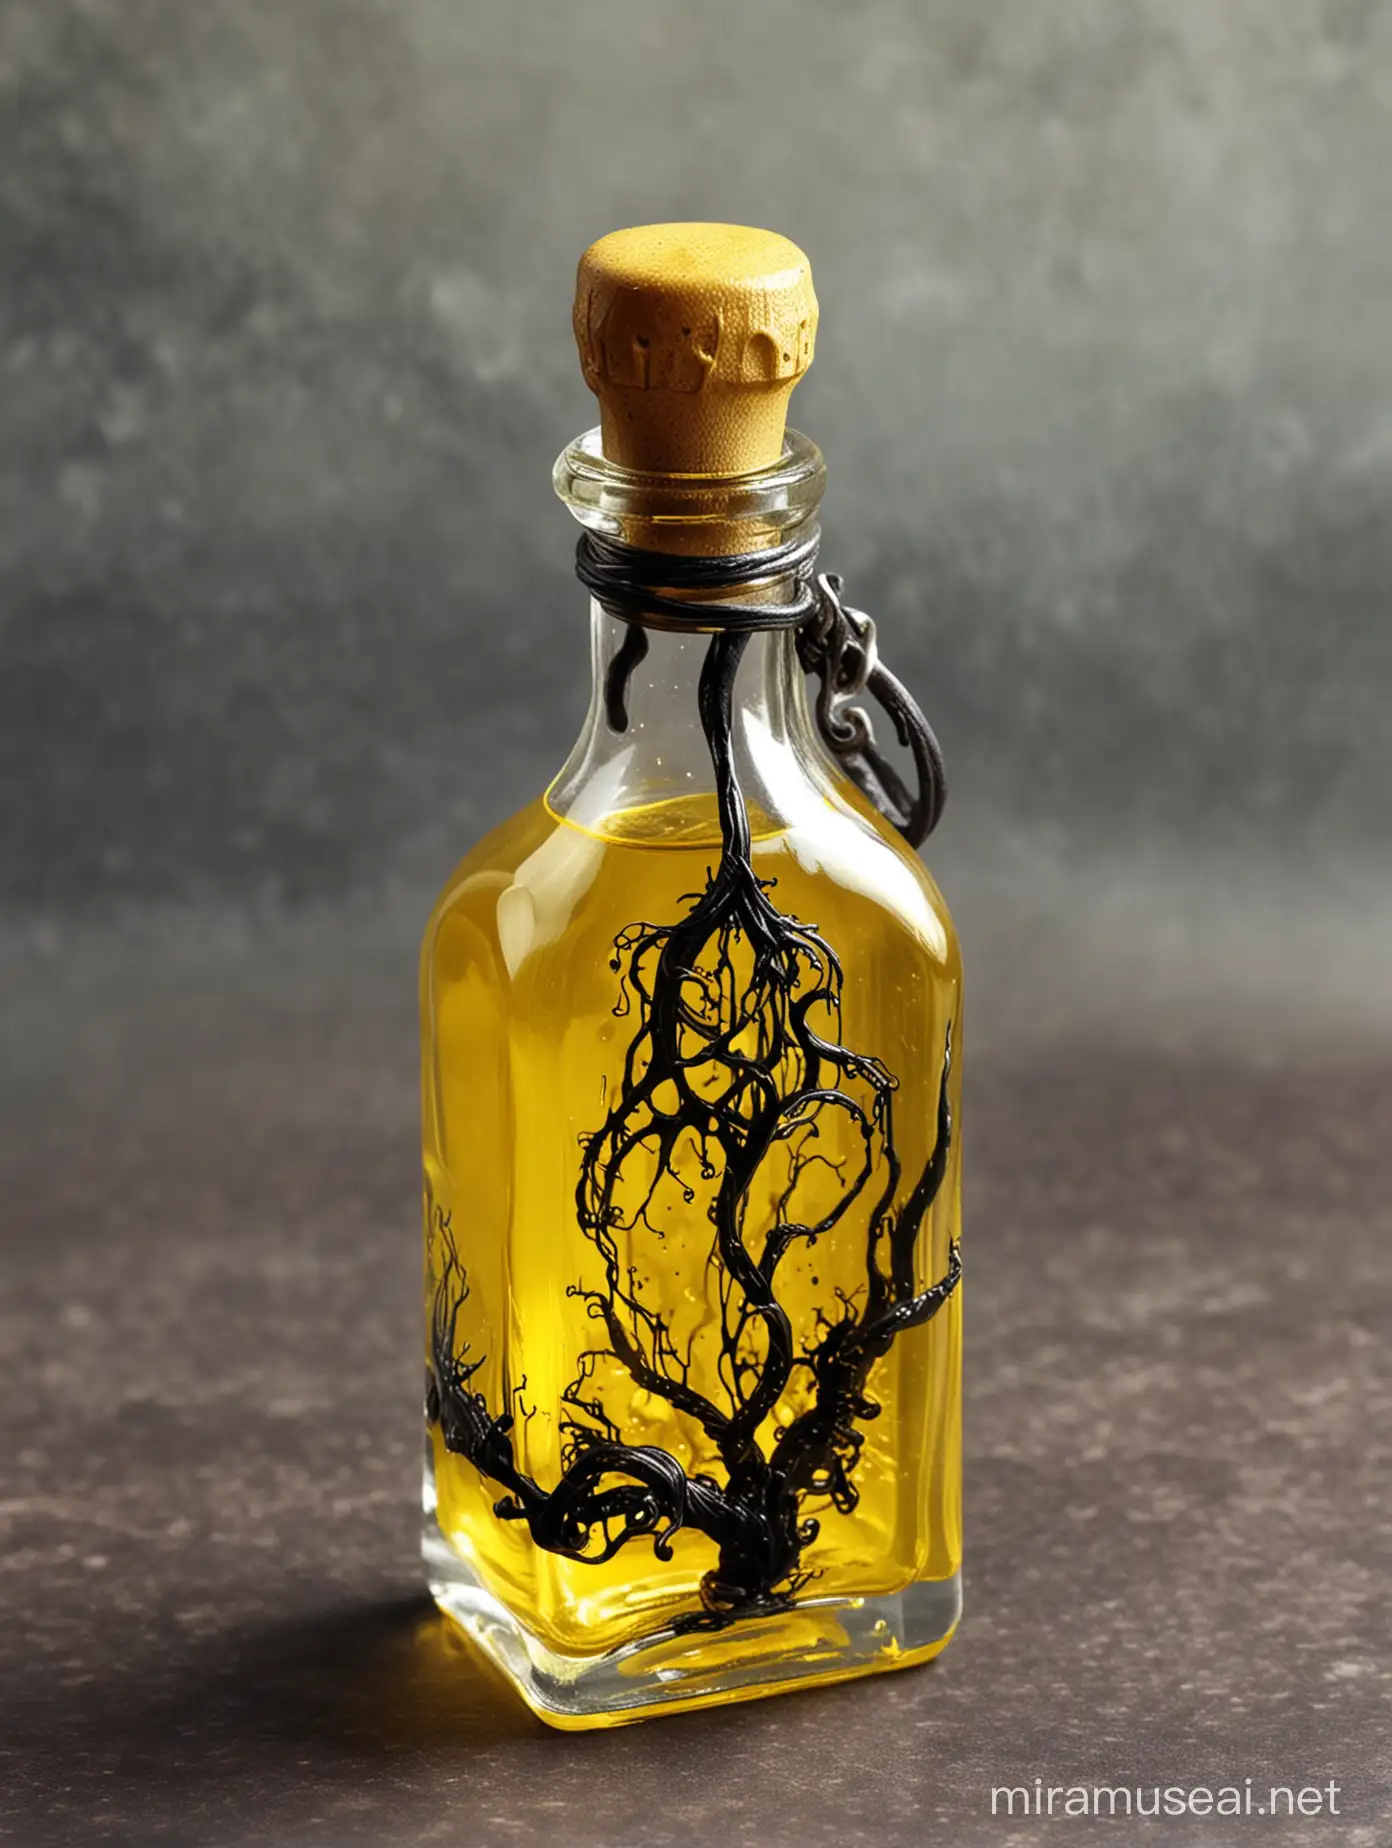 Eldritch potion, fantasy glass bottle with yellow liquid, D&D